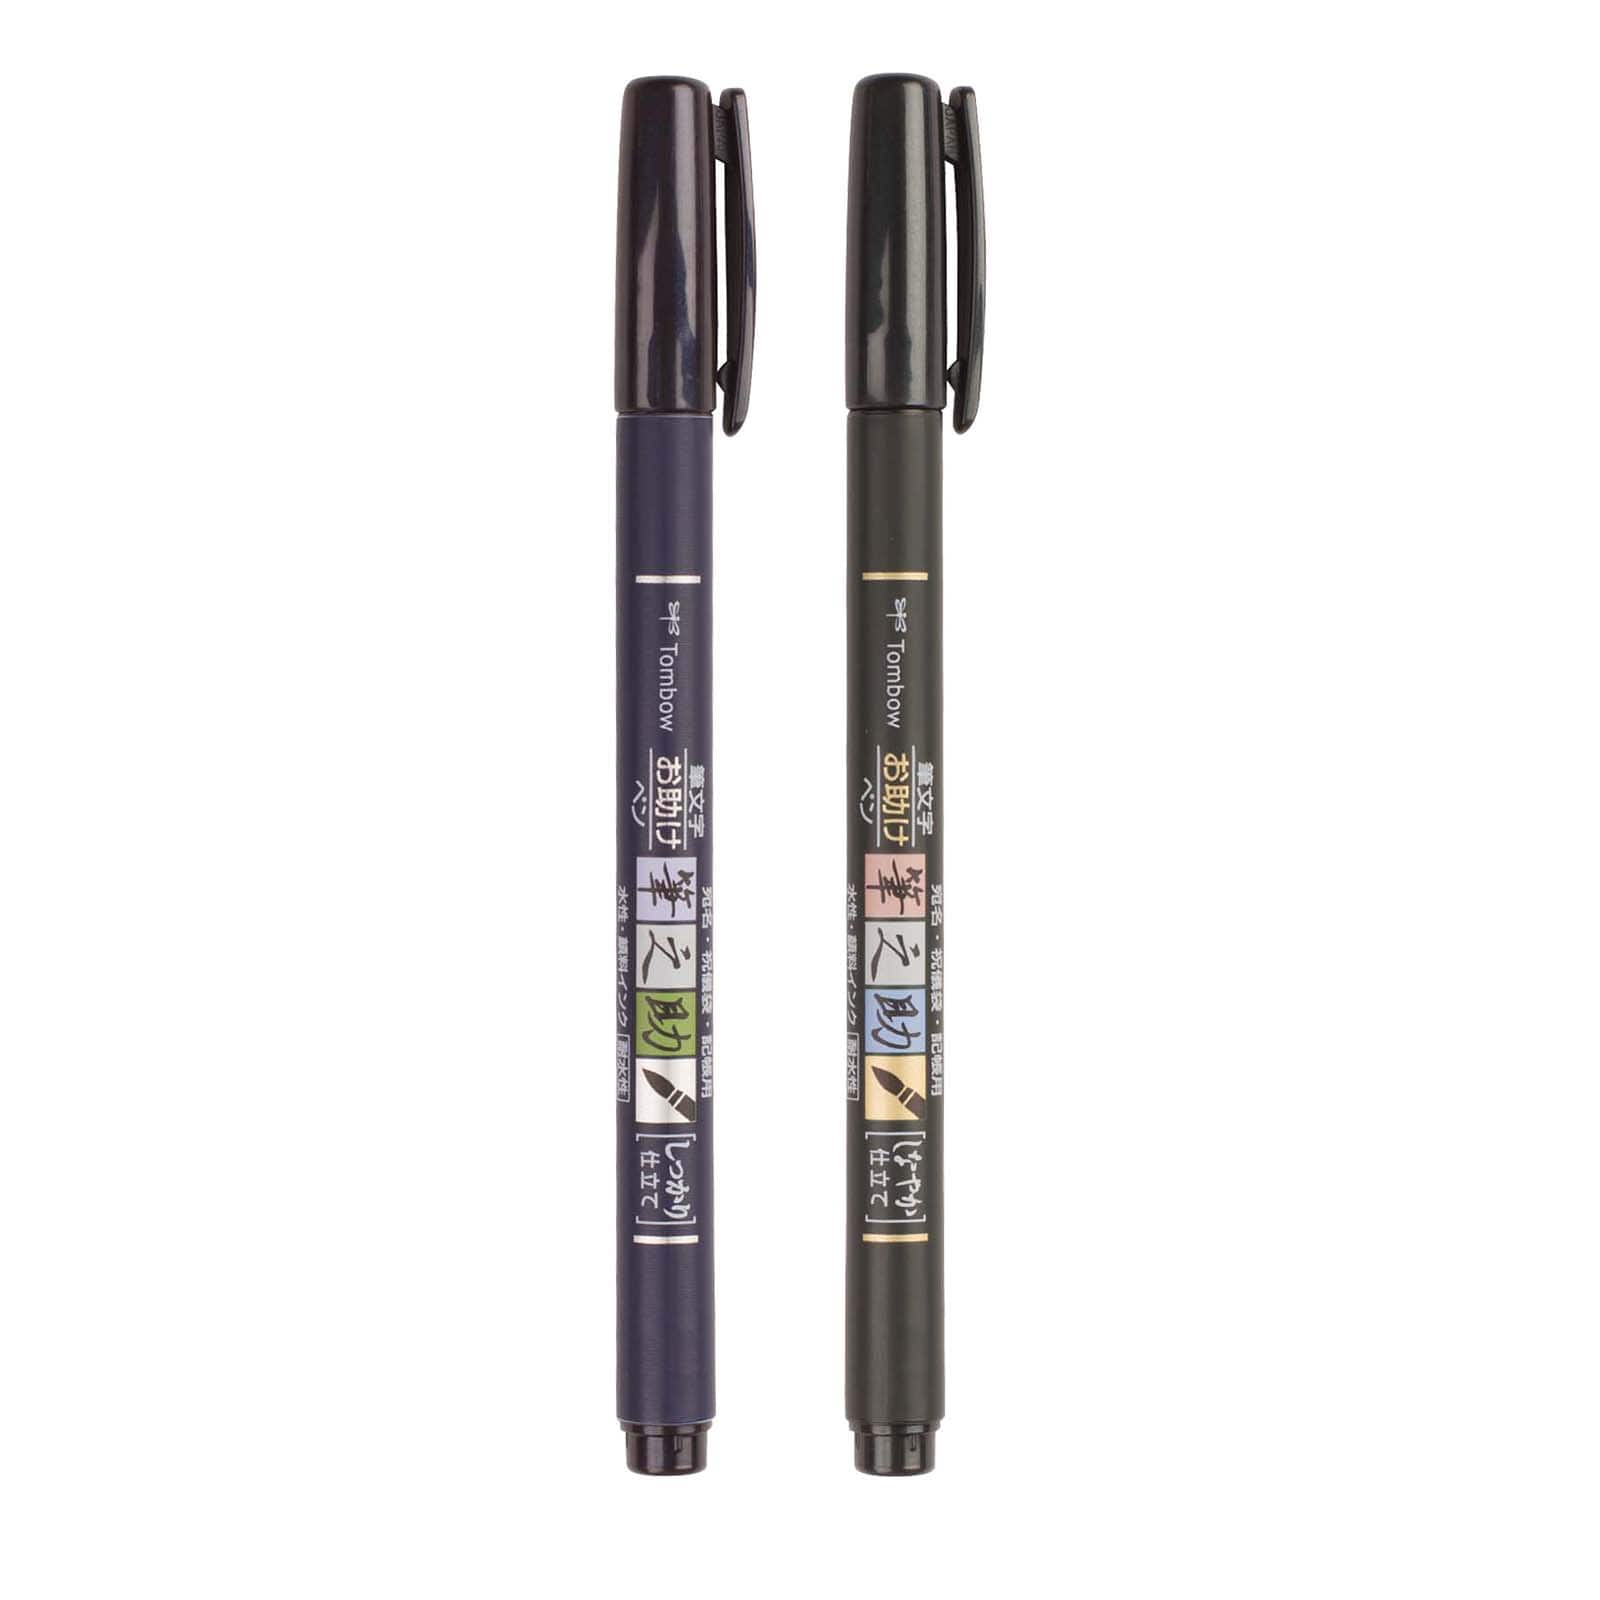  Tombow 62038 Fudenosuke Brush Pen, 2-Pack. Soft and Hard Tip Fudenosuke  Brush Pens for Calligraphy and Art Drawings : Arts, Crafts & Sewing